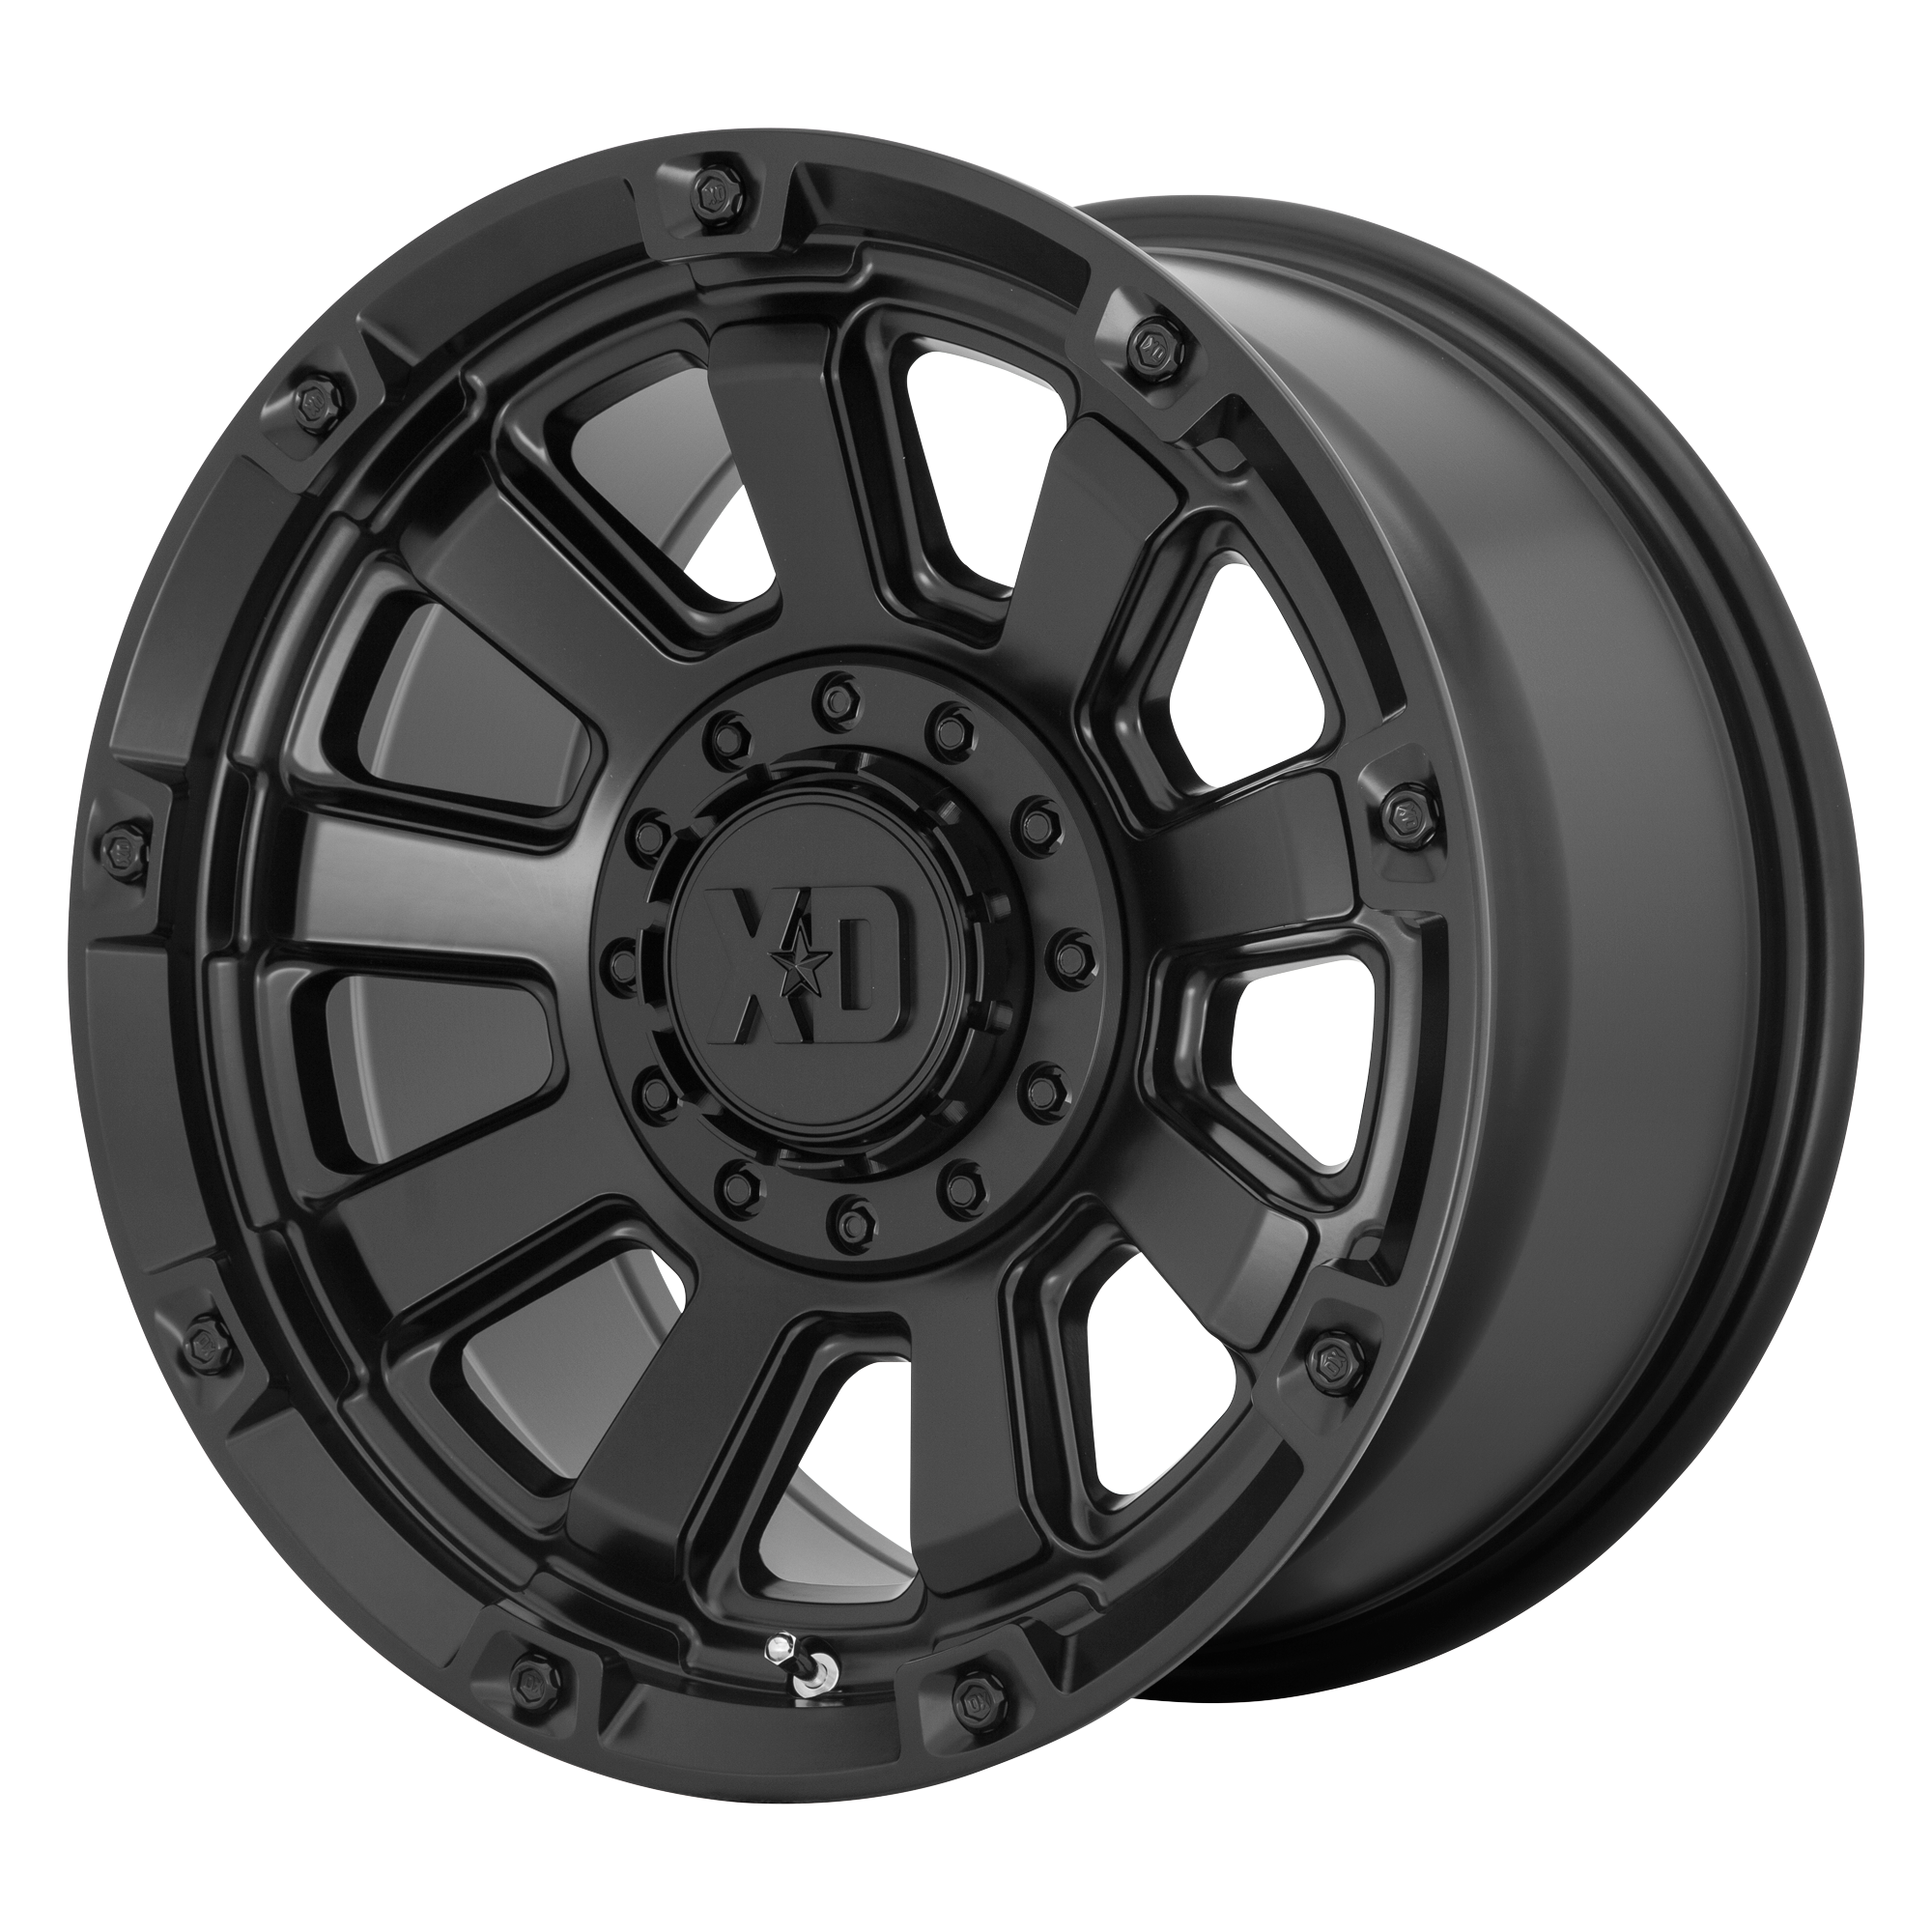 XD 20"x10" Non-Chrome Satin Black Custom Wheel ARSWCWXD85221080718N